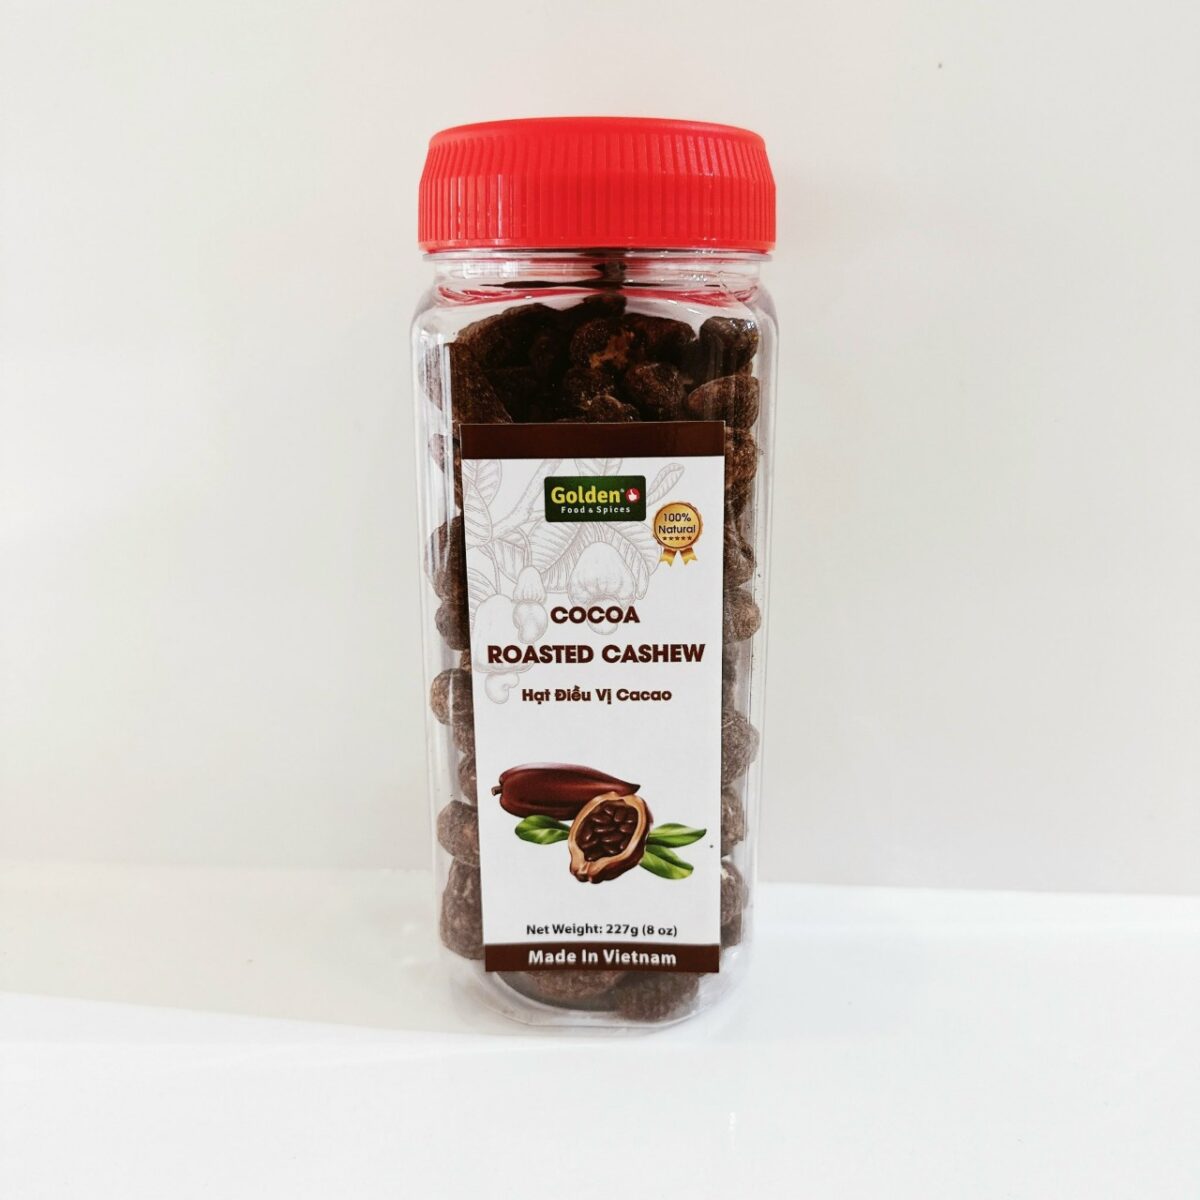 Cocoa Roasted Cashew - Hạt Điều Vị Cacao